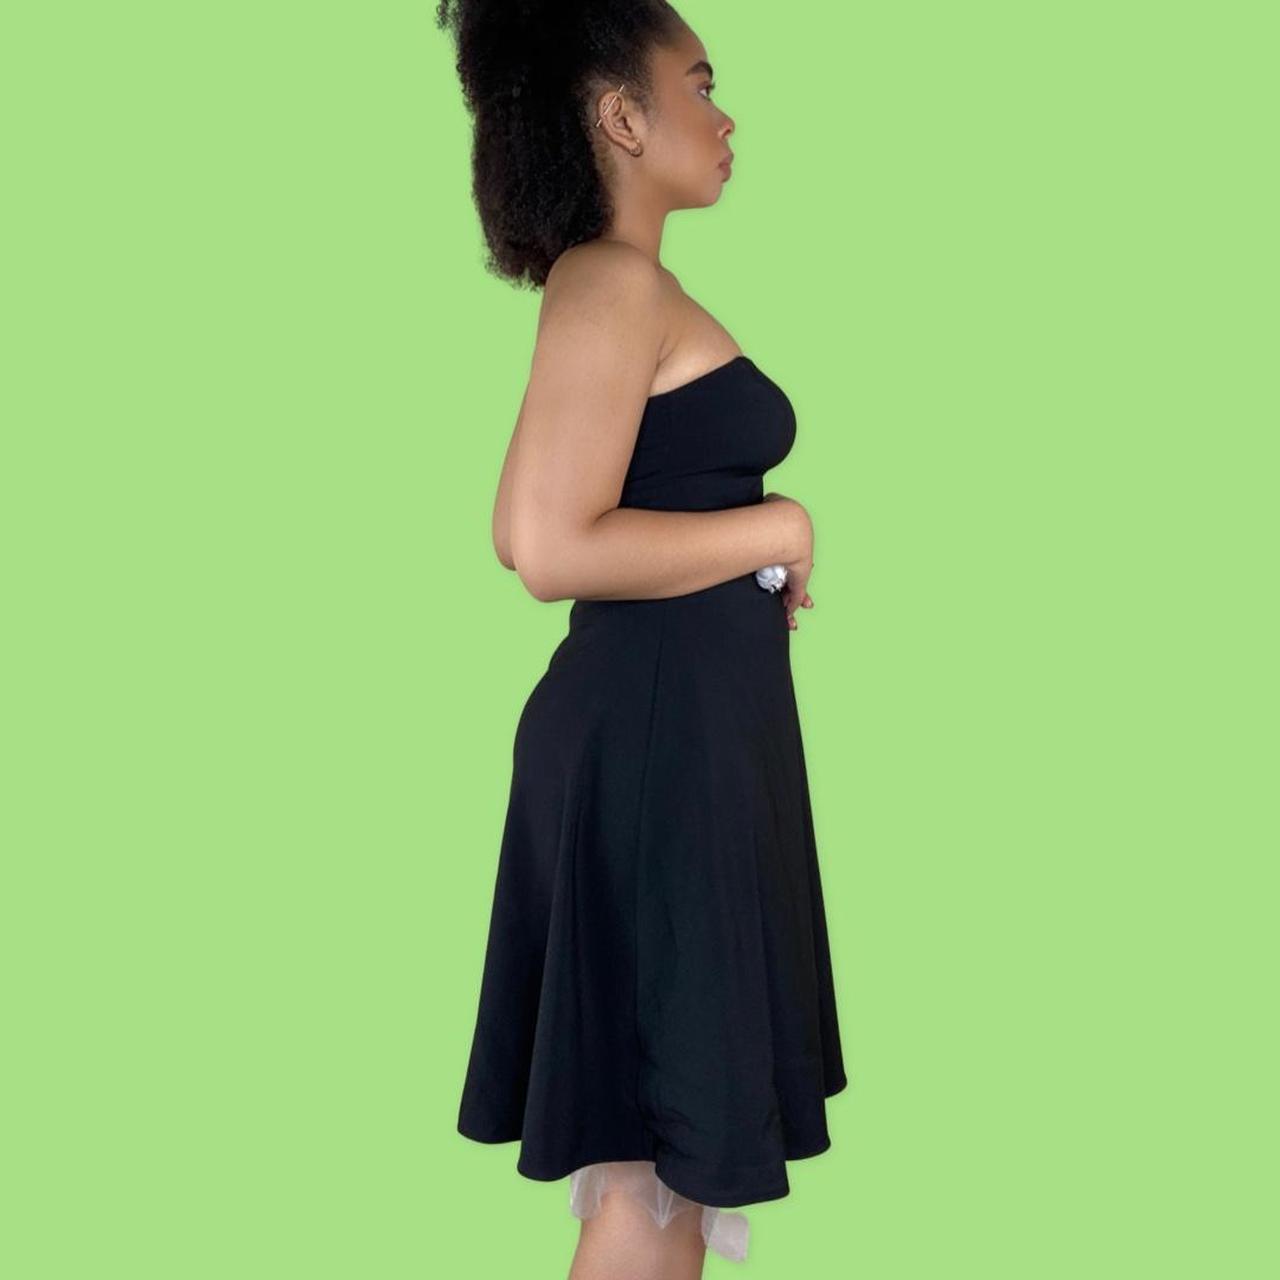 Product Image 3 - Strapless Grunge Core Dress. Size: